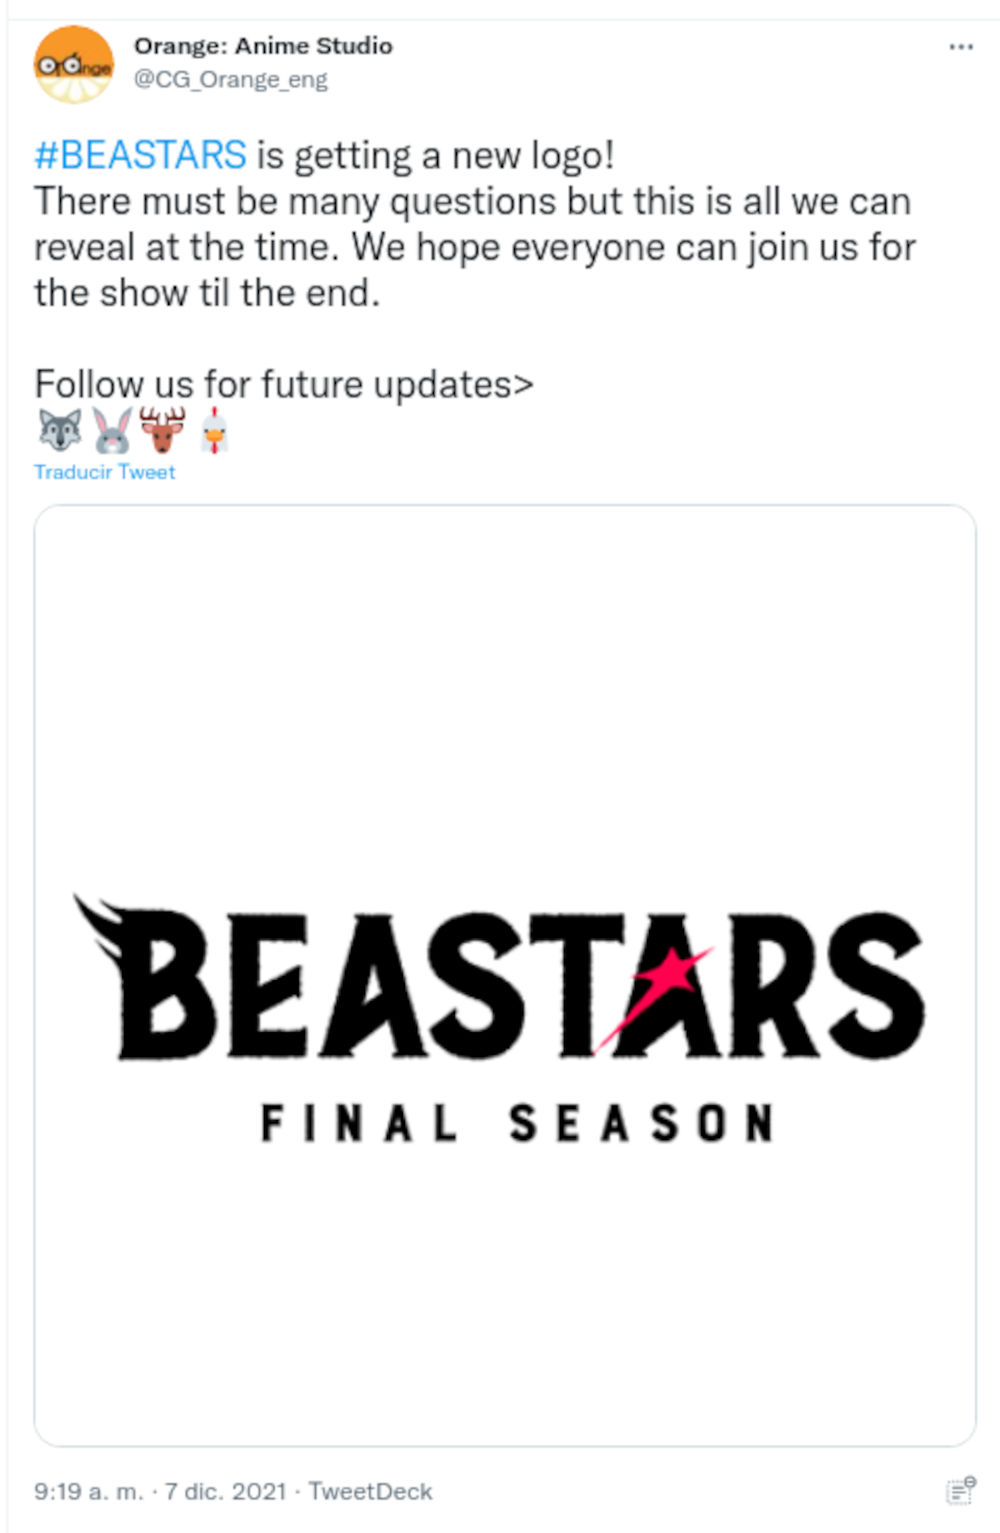 Final season of BEASTARS confirmed